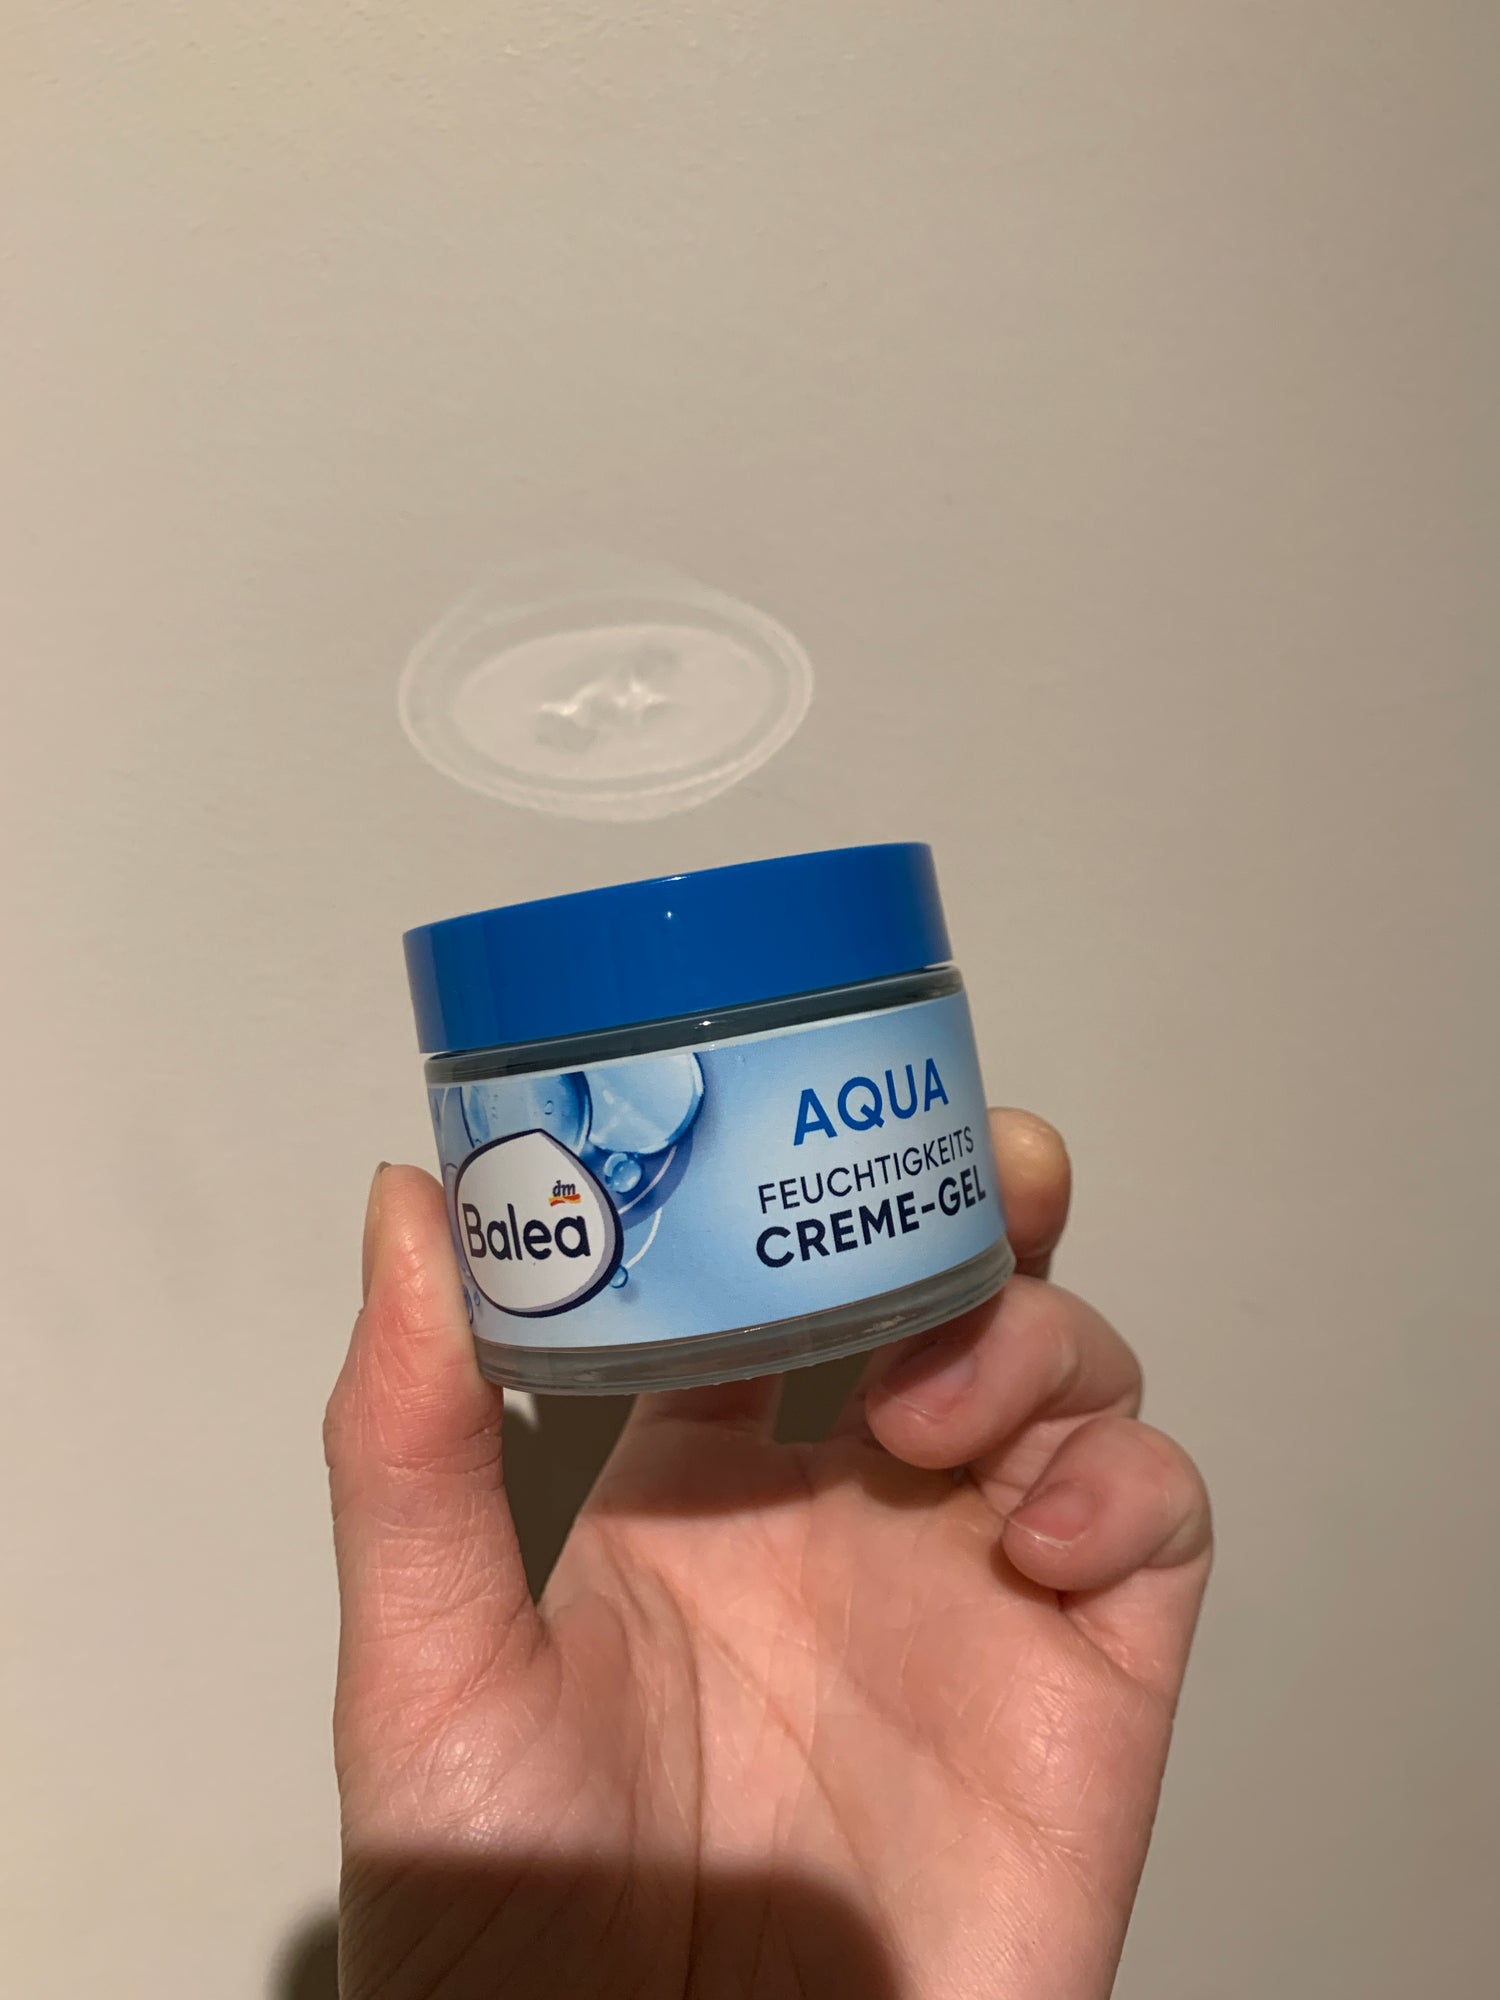 Balea Aqua Feuchtigekeits creme-gel - 1click2beauty